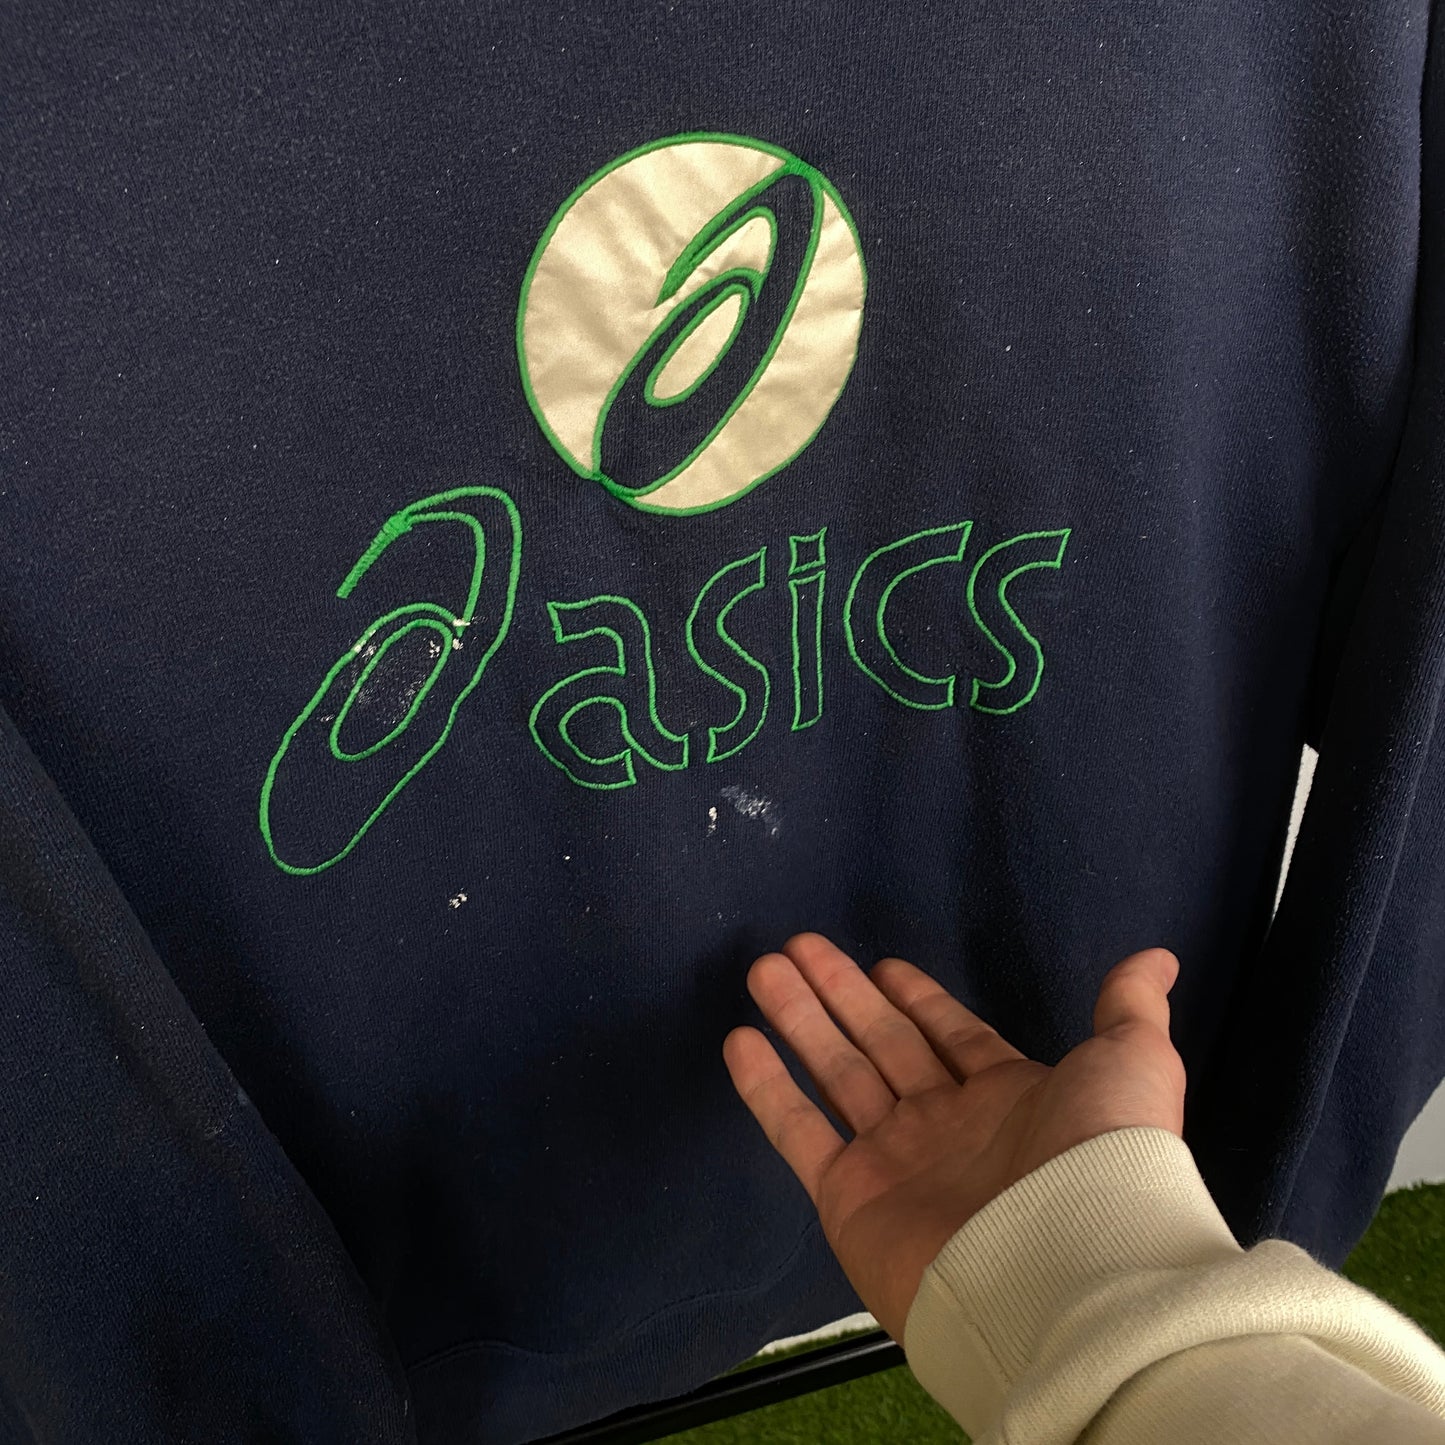 Retro Asics Sweatshirt Blue Medium